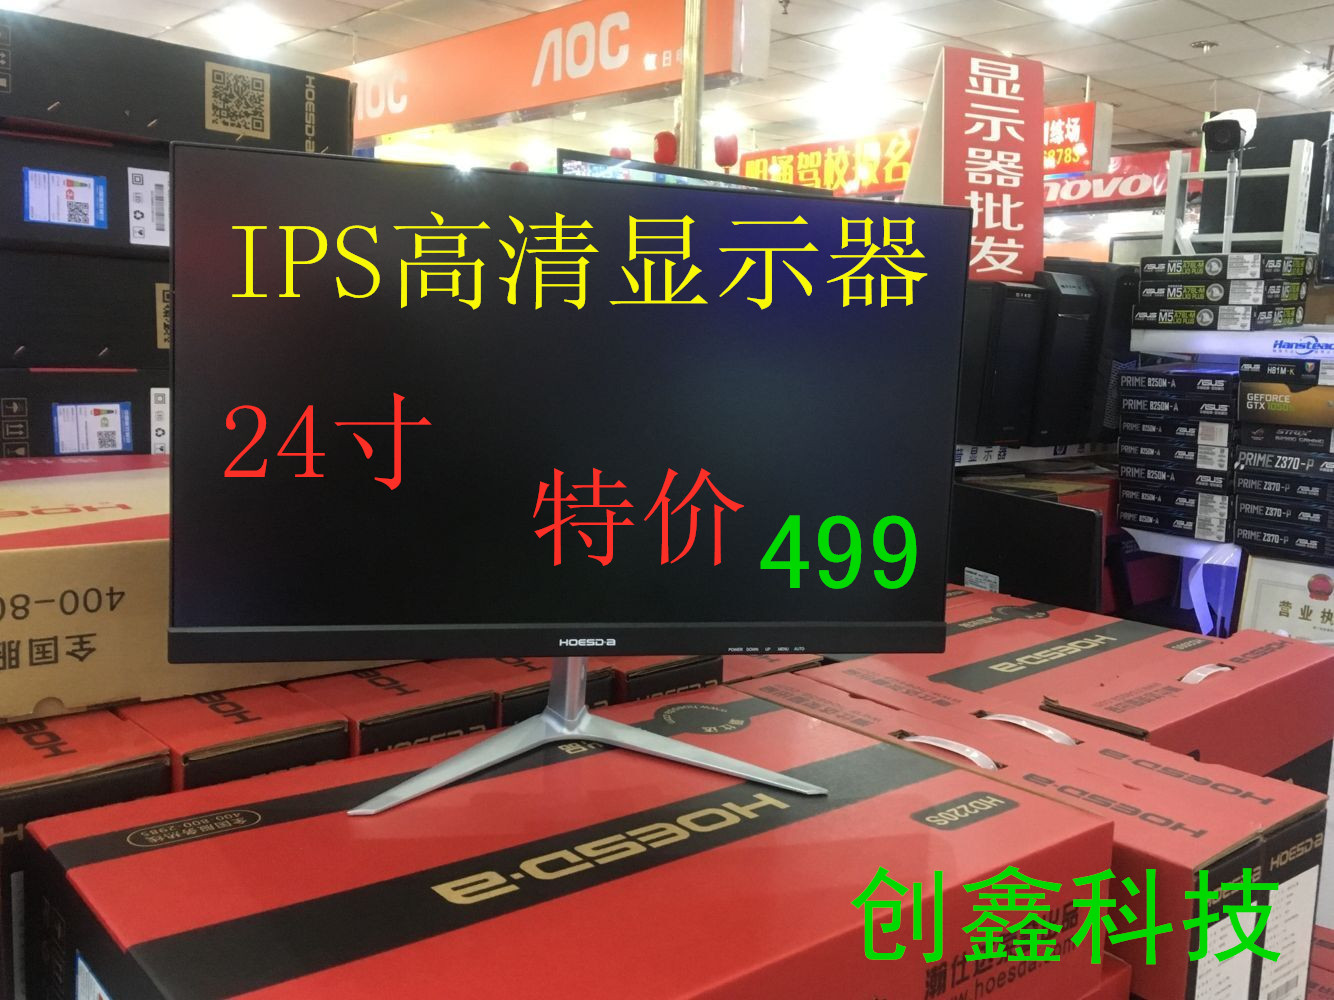 HANSTEAD Hanstad LCD 24 inch computer display IPS24 inch special price 499